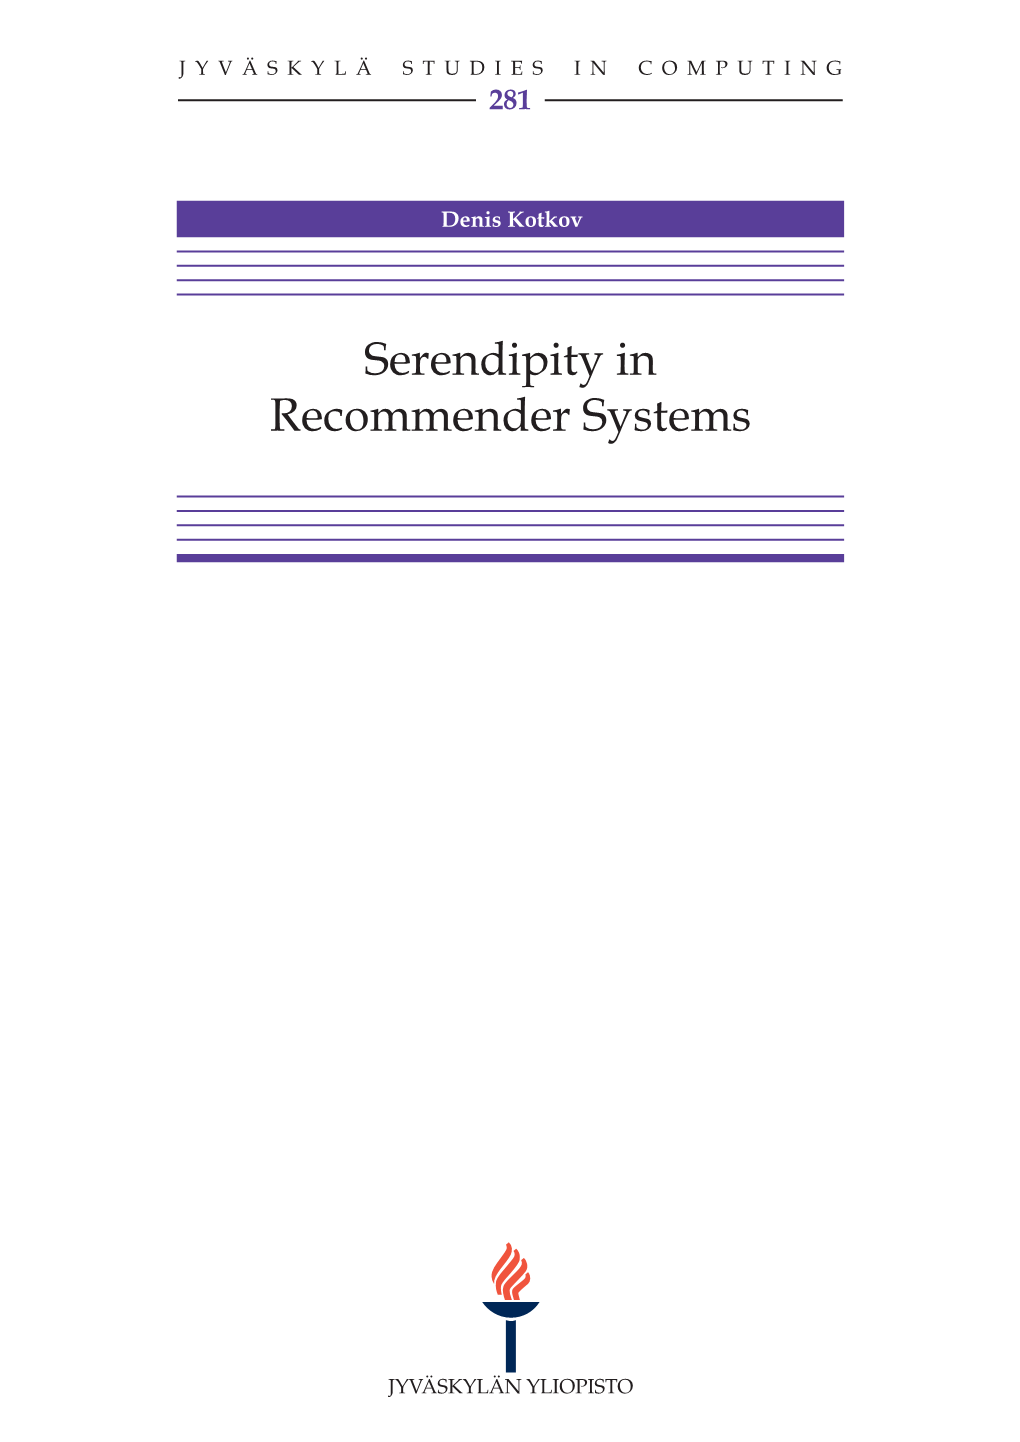 Serendipity in Recommender Systems JYVÄSKYLÄ STUDIES in COMPUTING 281